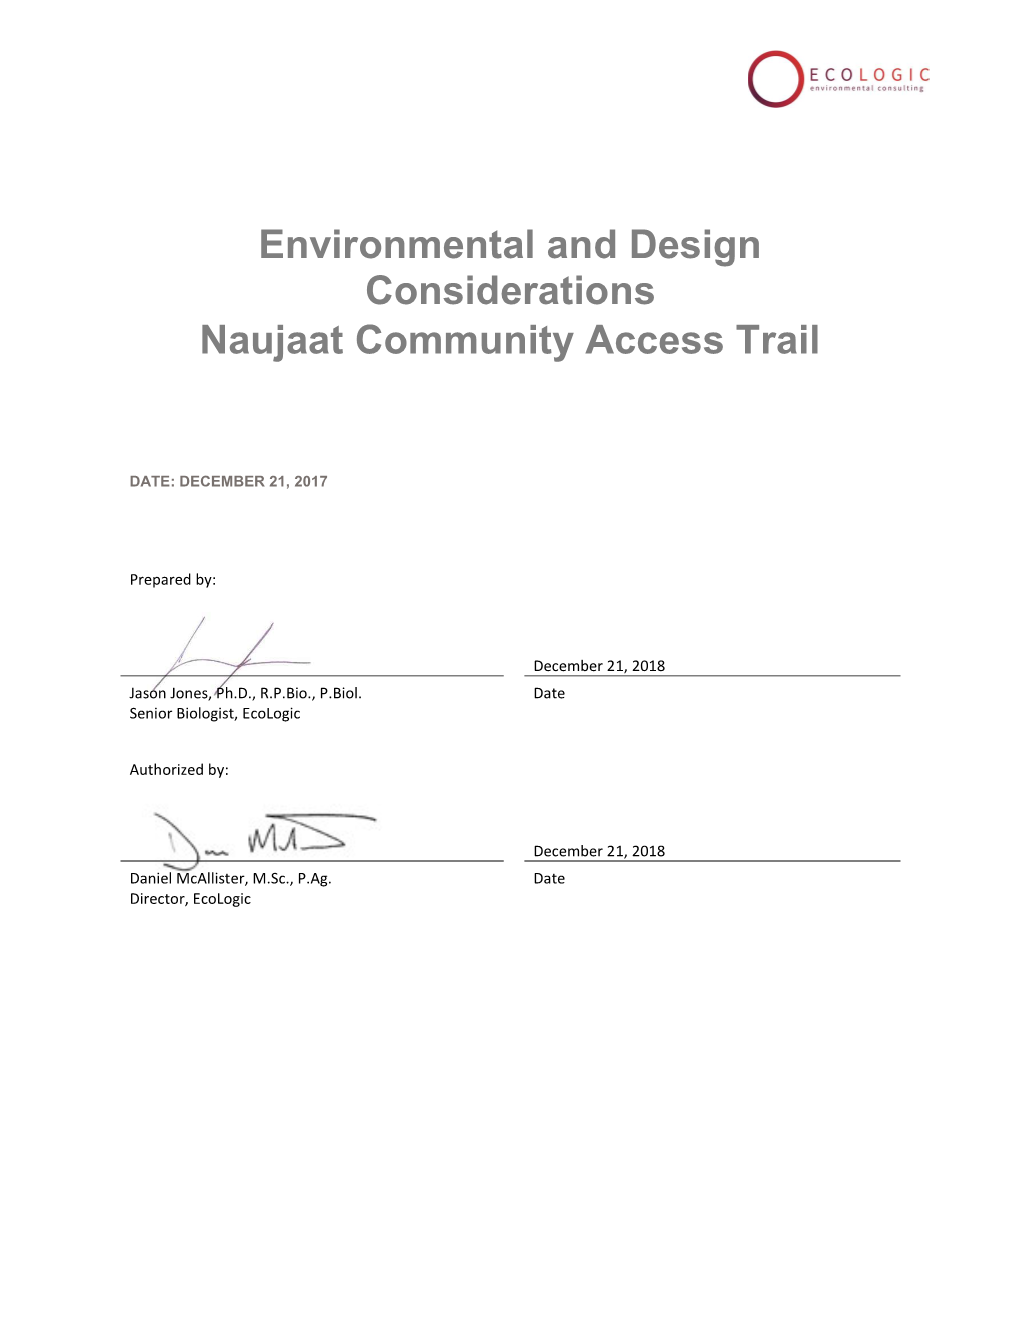 Environmental and Design Considerations Naujaat Community Access Trail